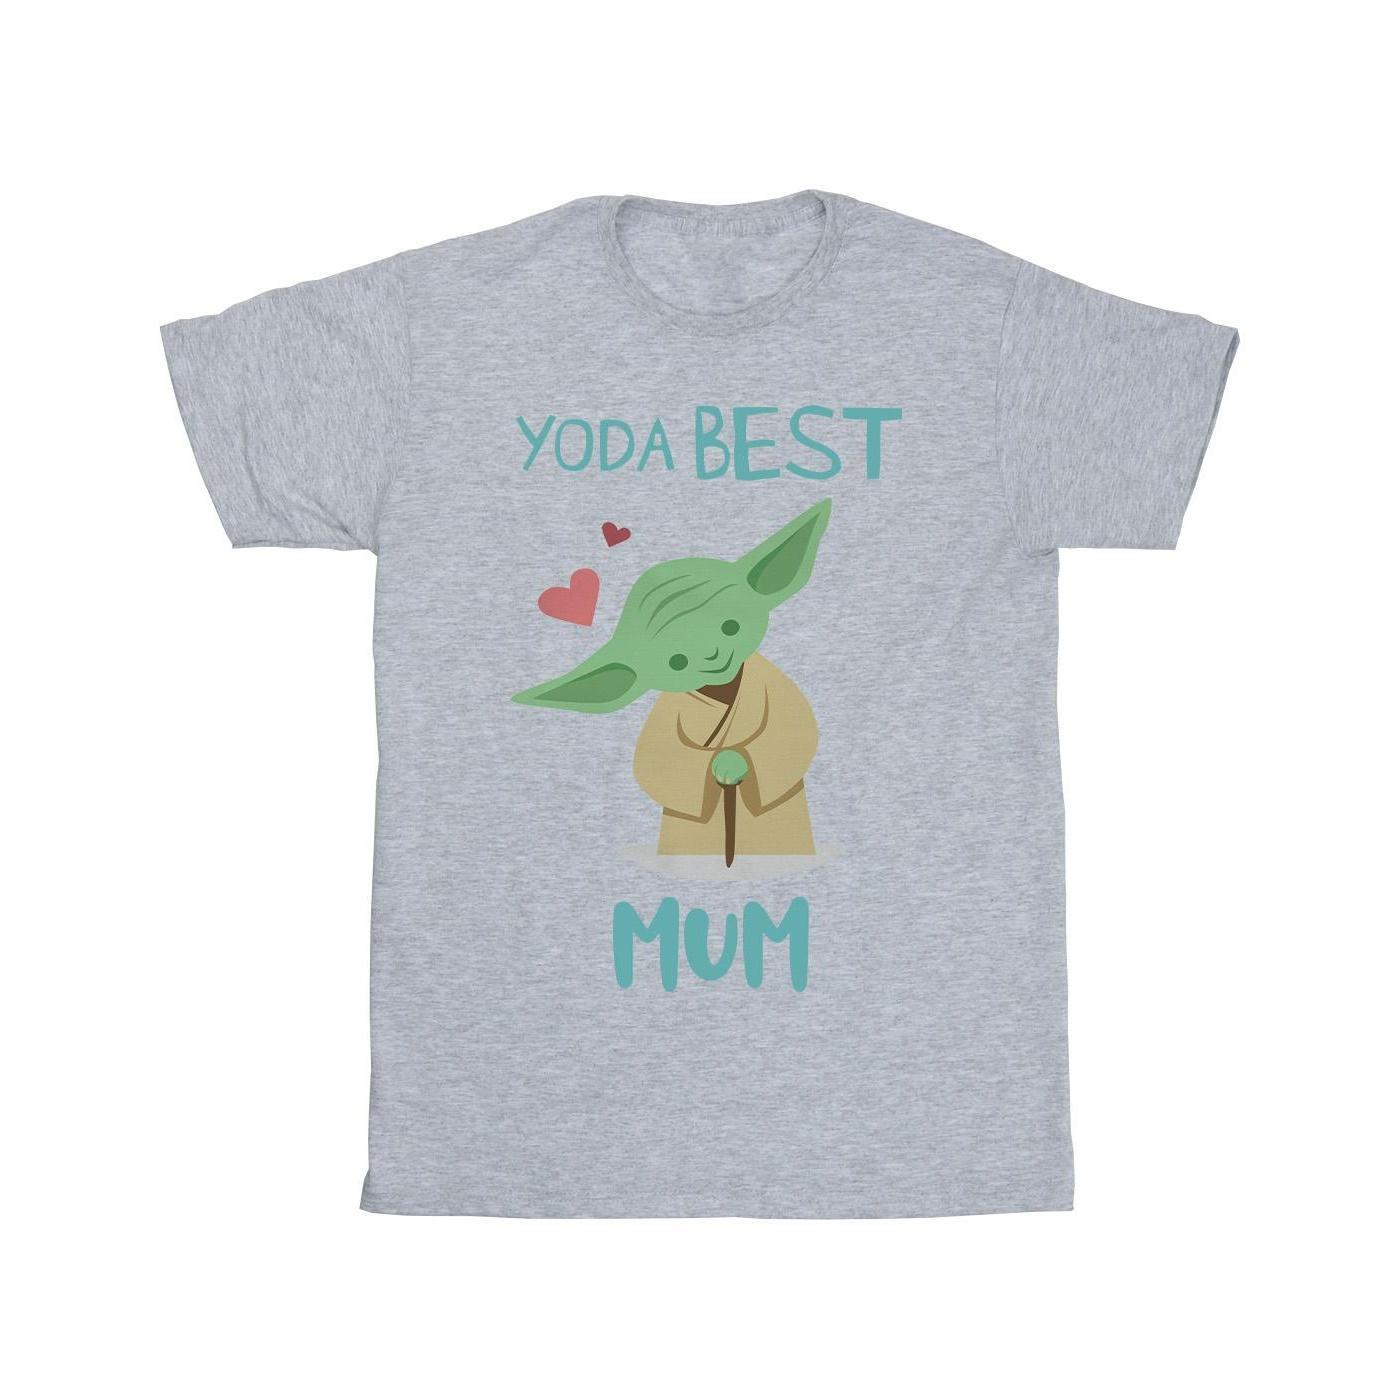 Star Wars Mens Yoda Best Mum T-Shirt (Sports Grey) (S)